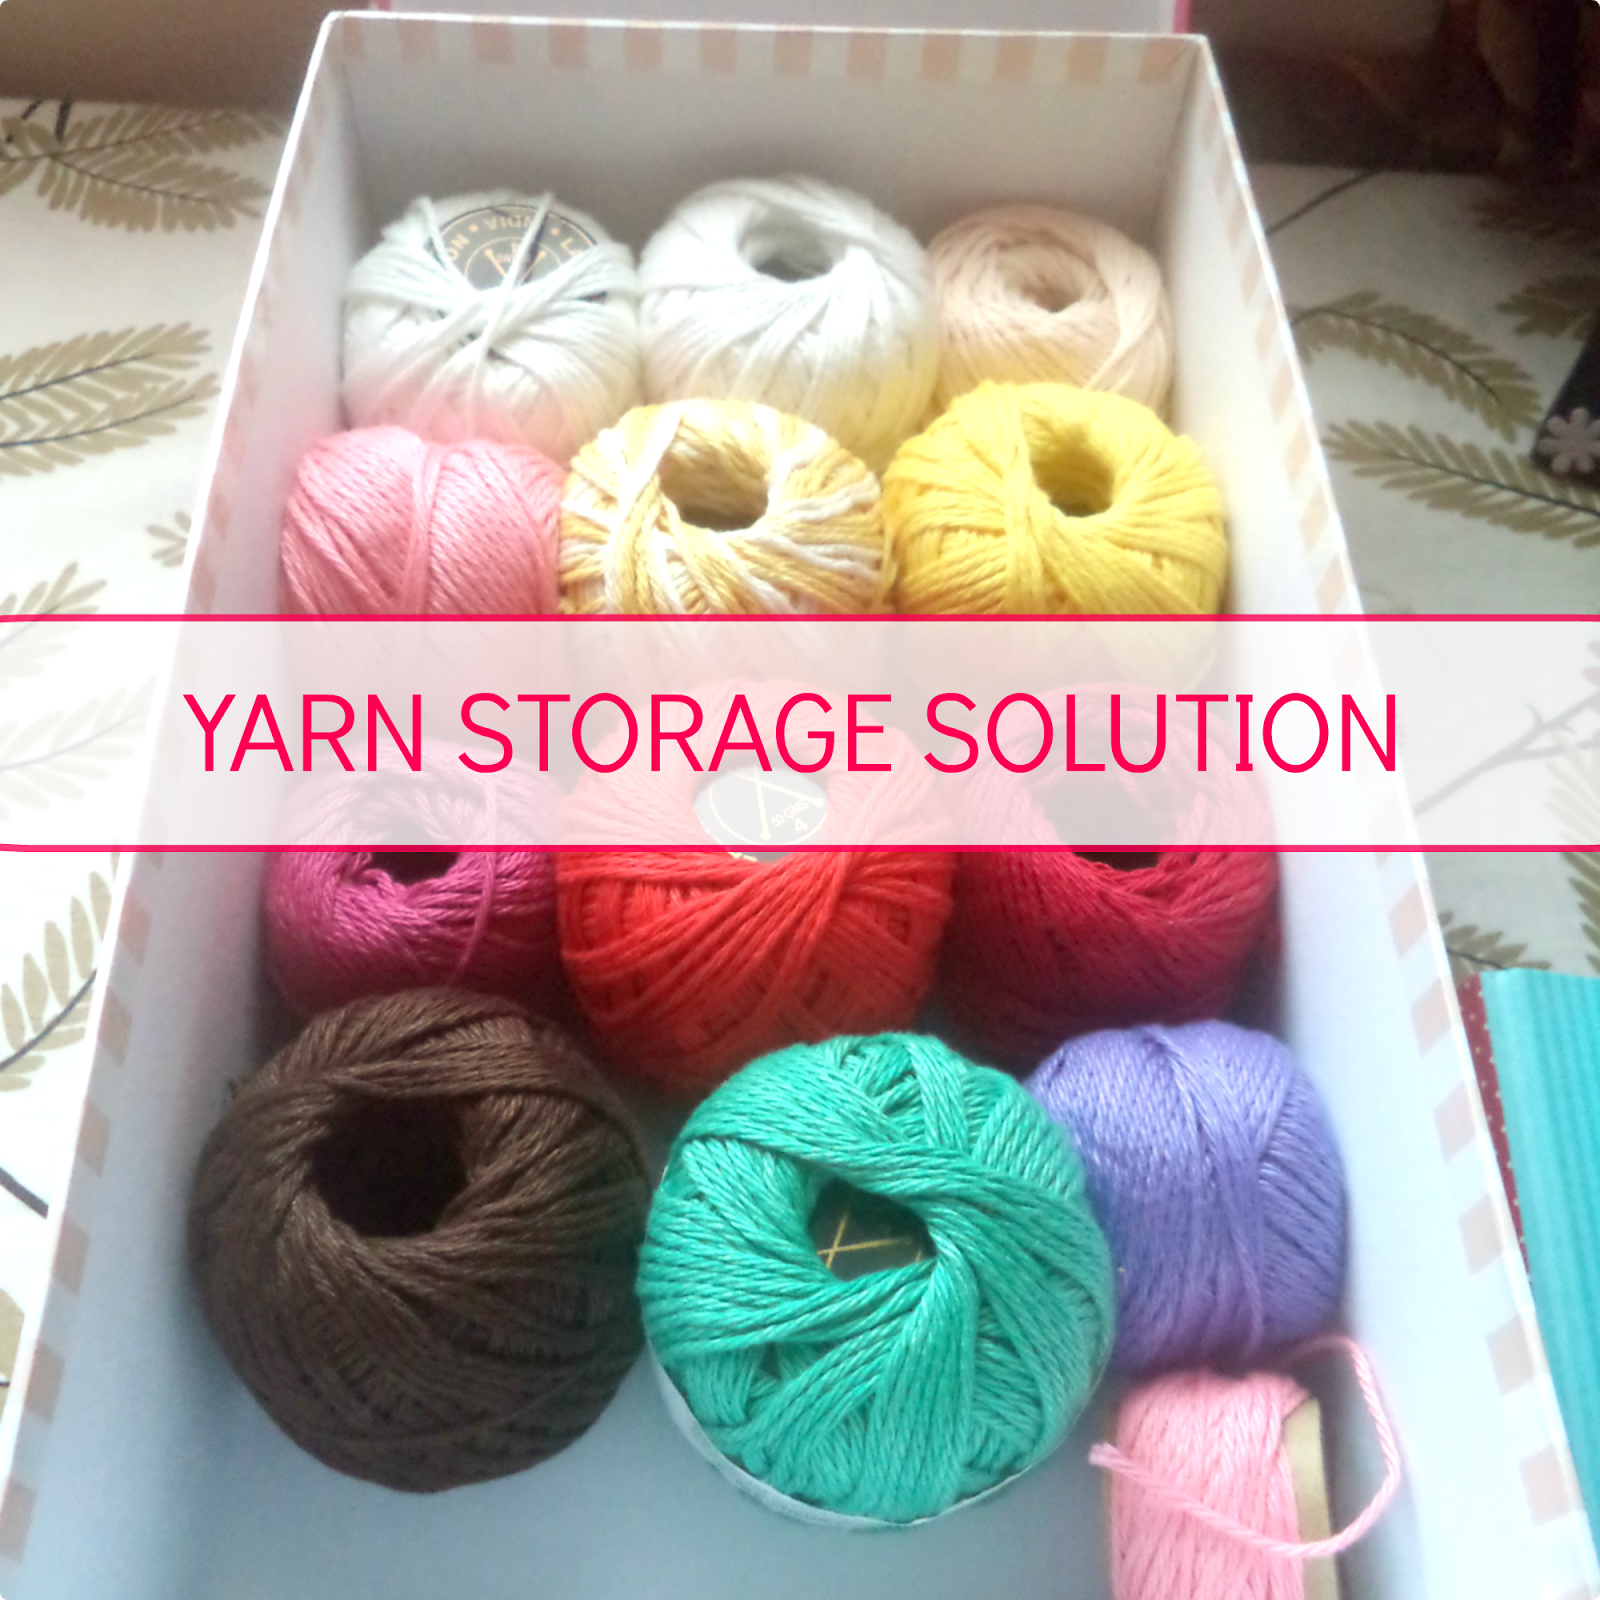 Yarn Storage: Organizing and Storing Cotton Yarn in a Cardboard Box